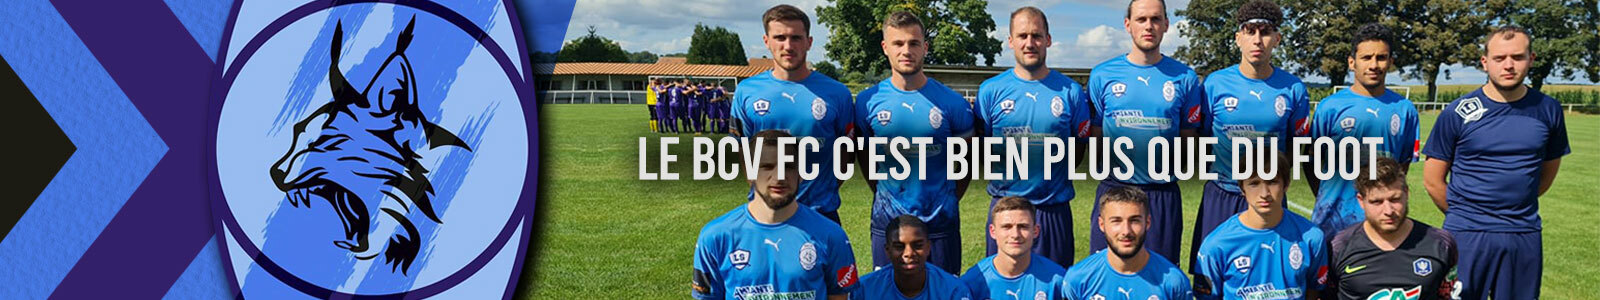 Bulgnéville Contrex Vittel Football Club : site officiel du club de foot de Bulgnéville - footeo